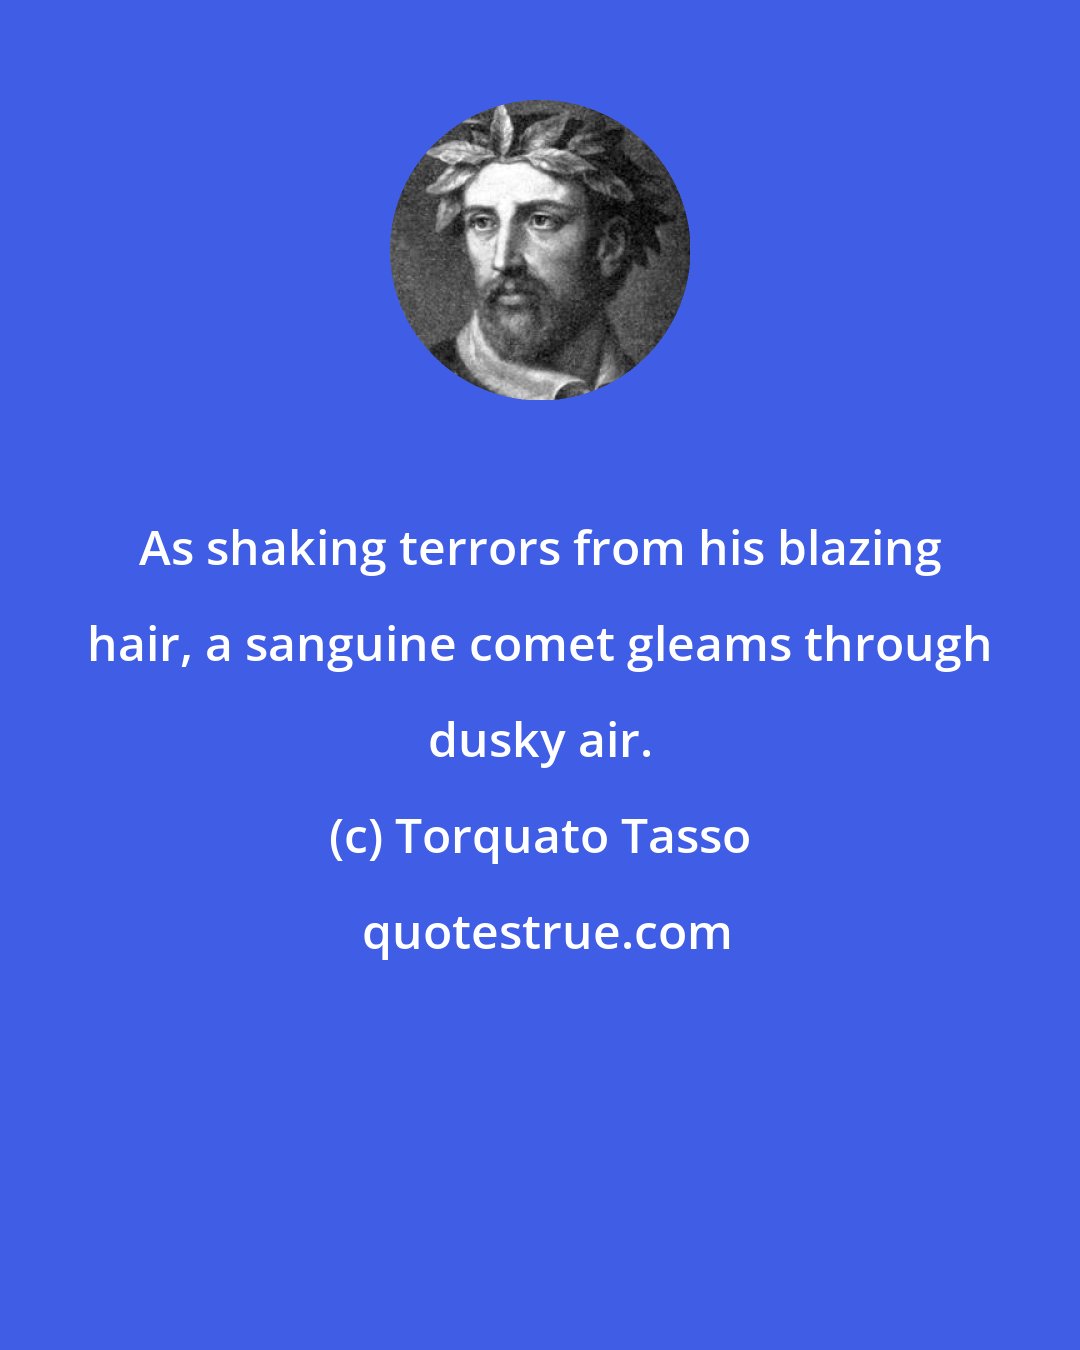 Torquato Tasso: As shaking terrors from his blazing hair, a sanguine comet gleams through dusky air.